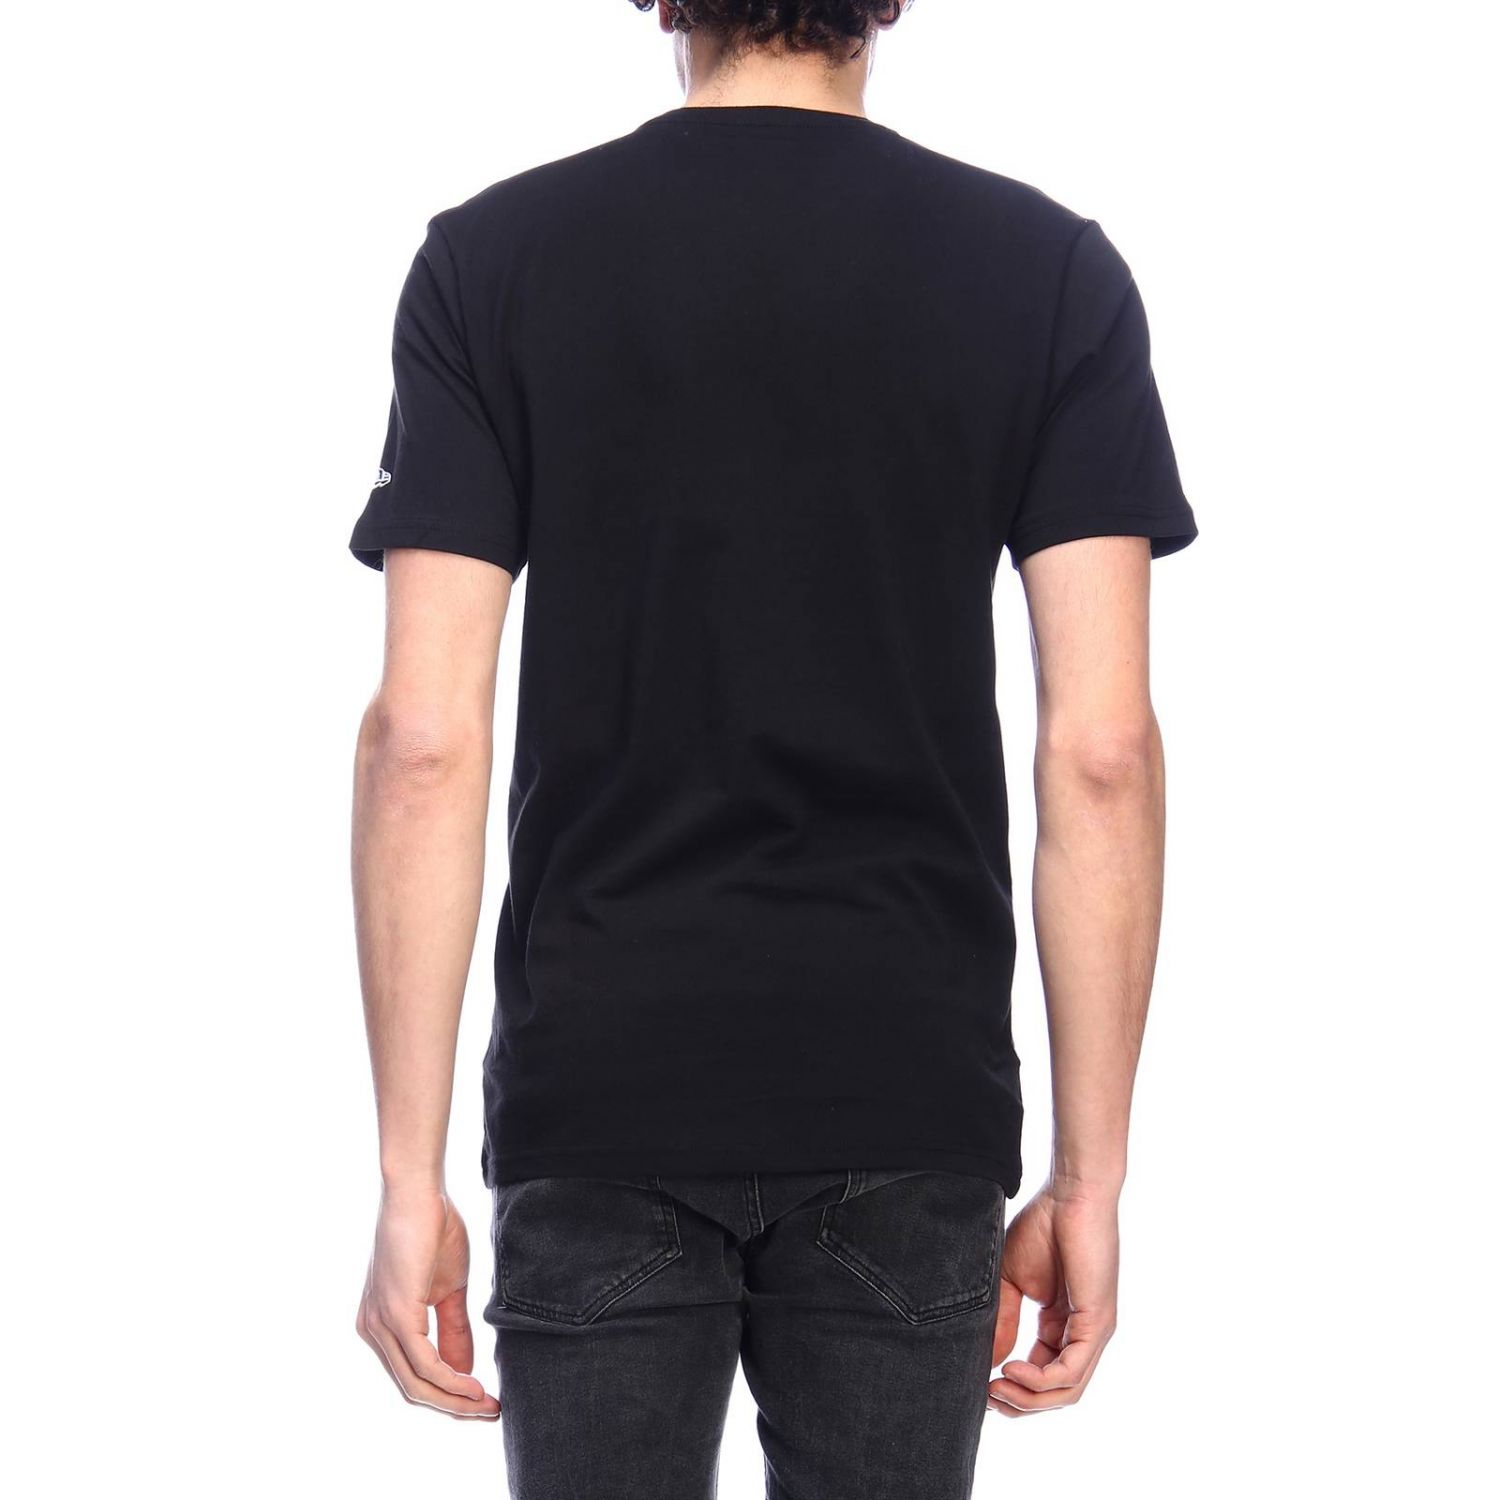 New Era Outlet: T-shirt men | T-Shirt New Era Men Black | T-Shirt New ...